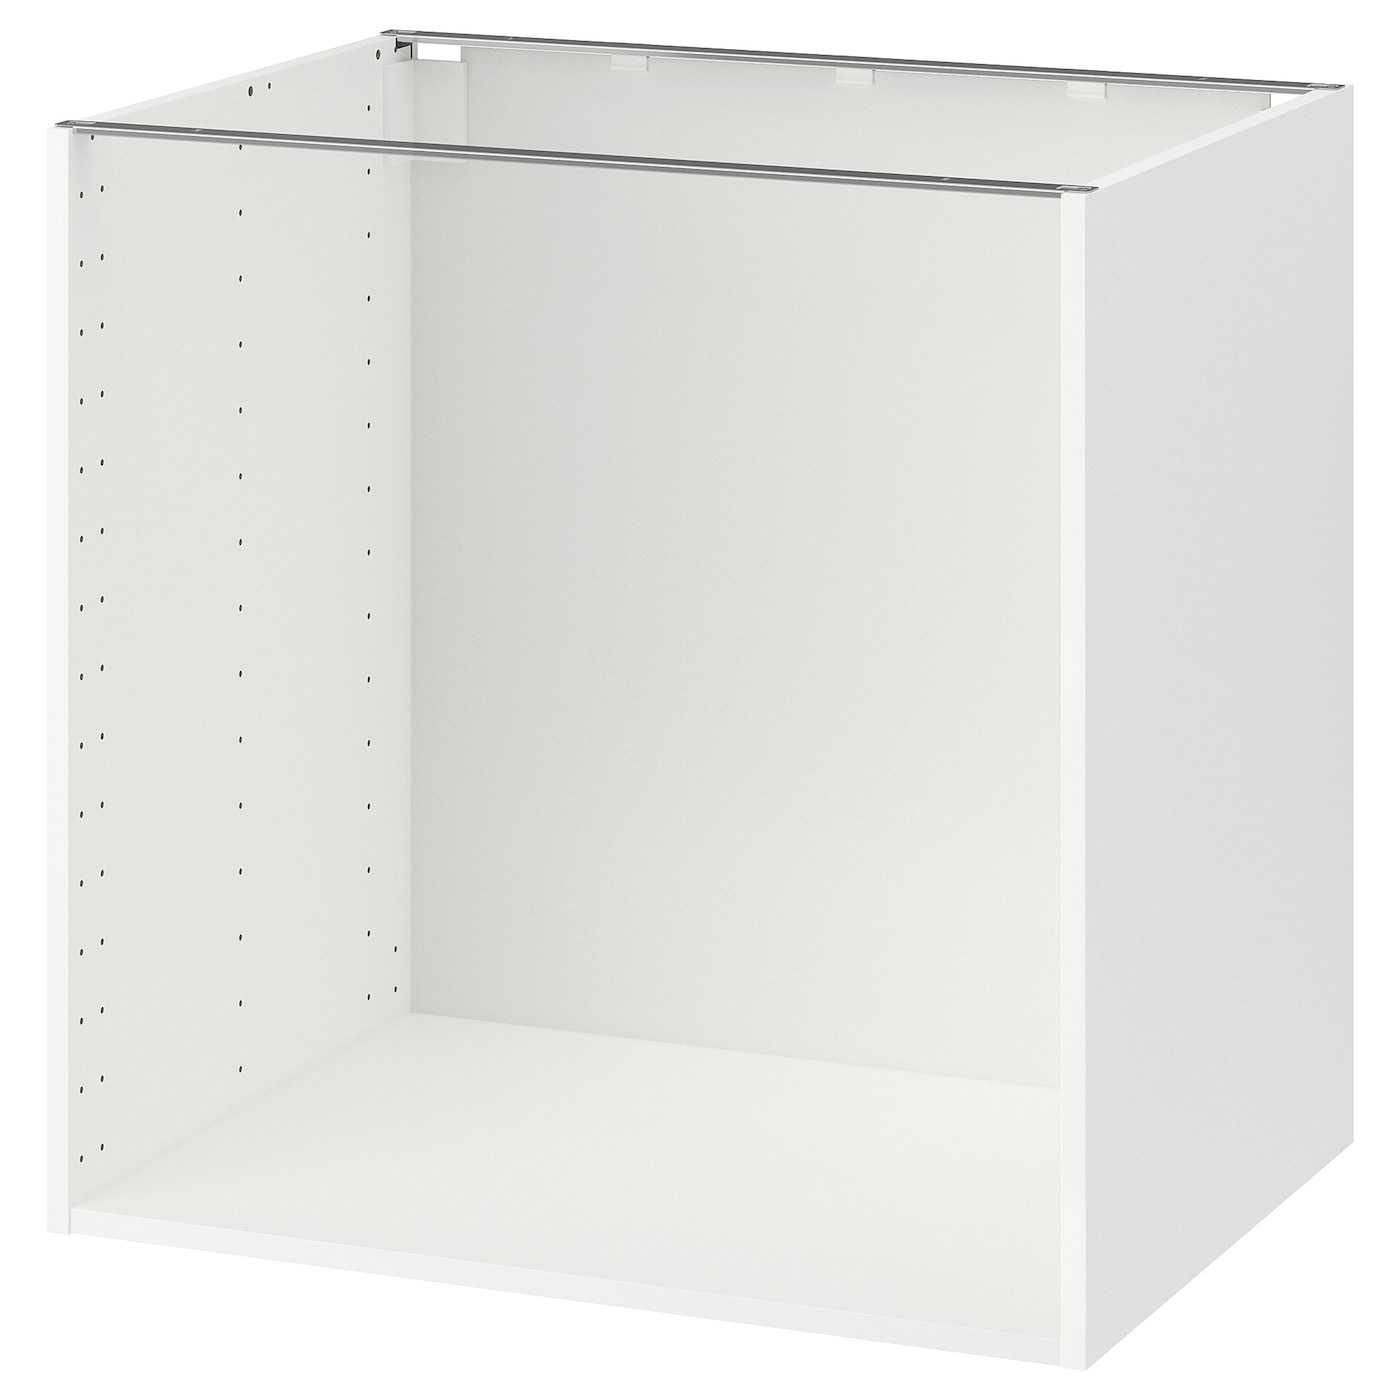 Каркас напольного шкафа - IKEA METOD, 80x60x80 см, белый МЕТОД ИКЕА